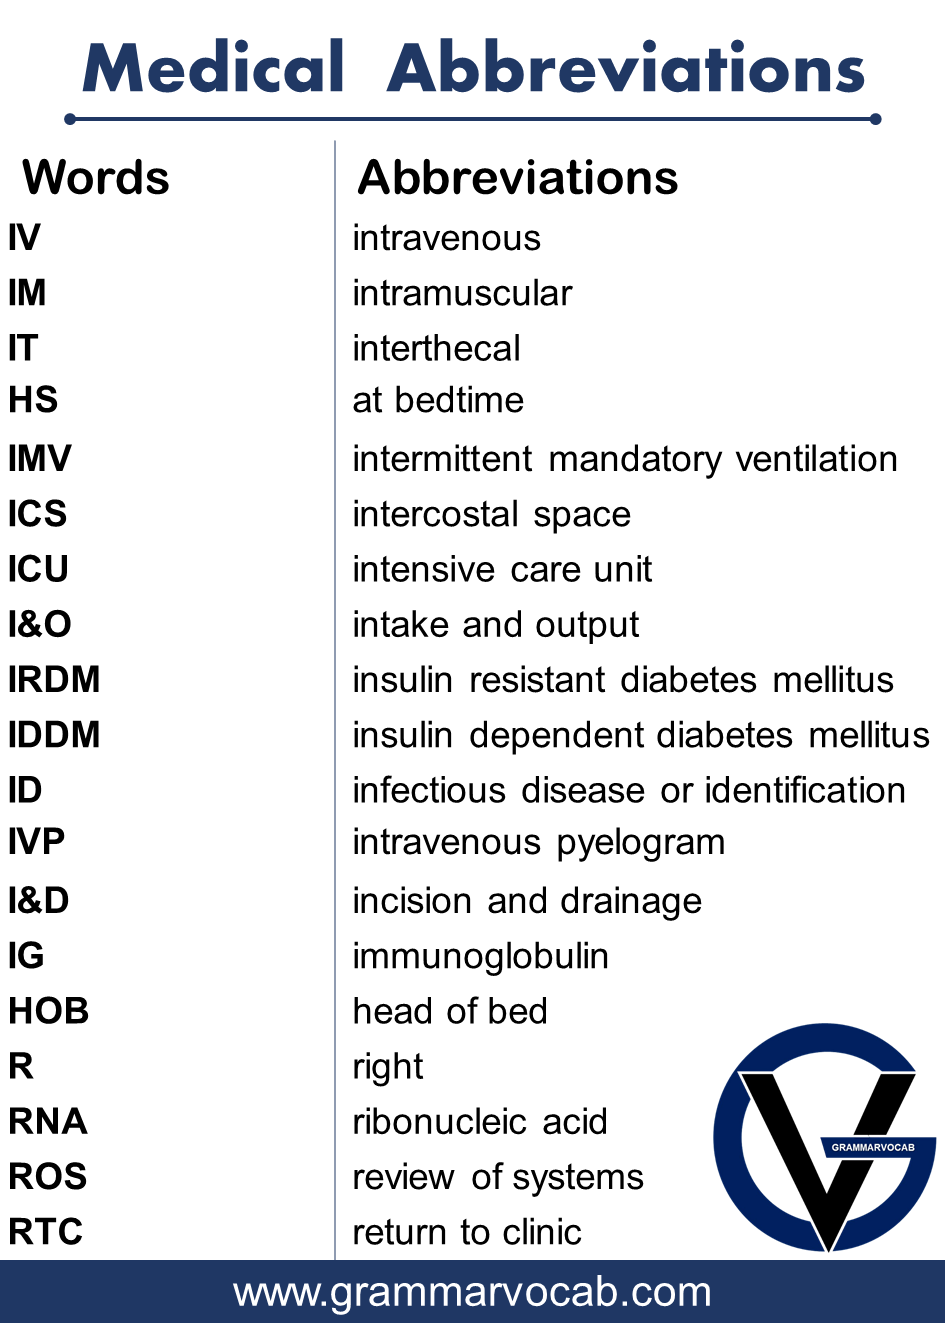 Medical acronyms